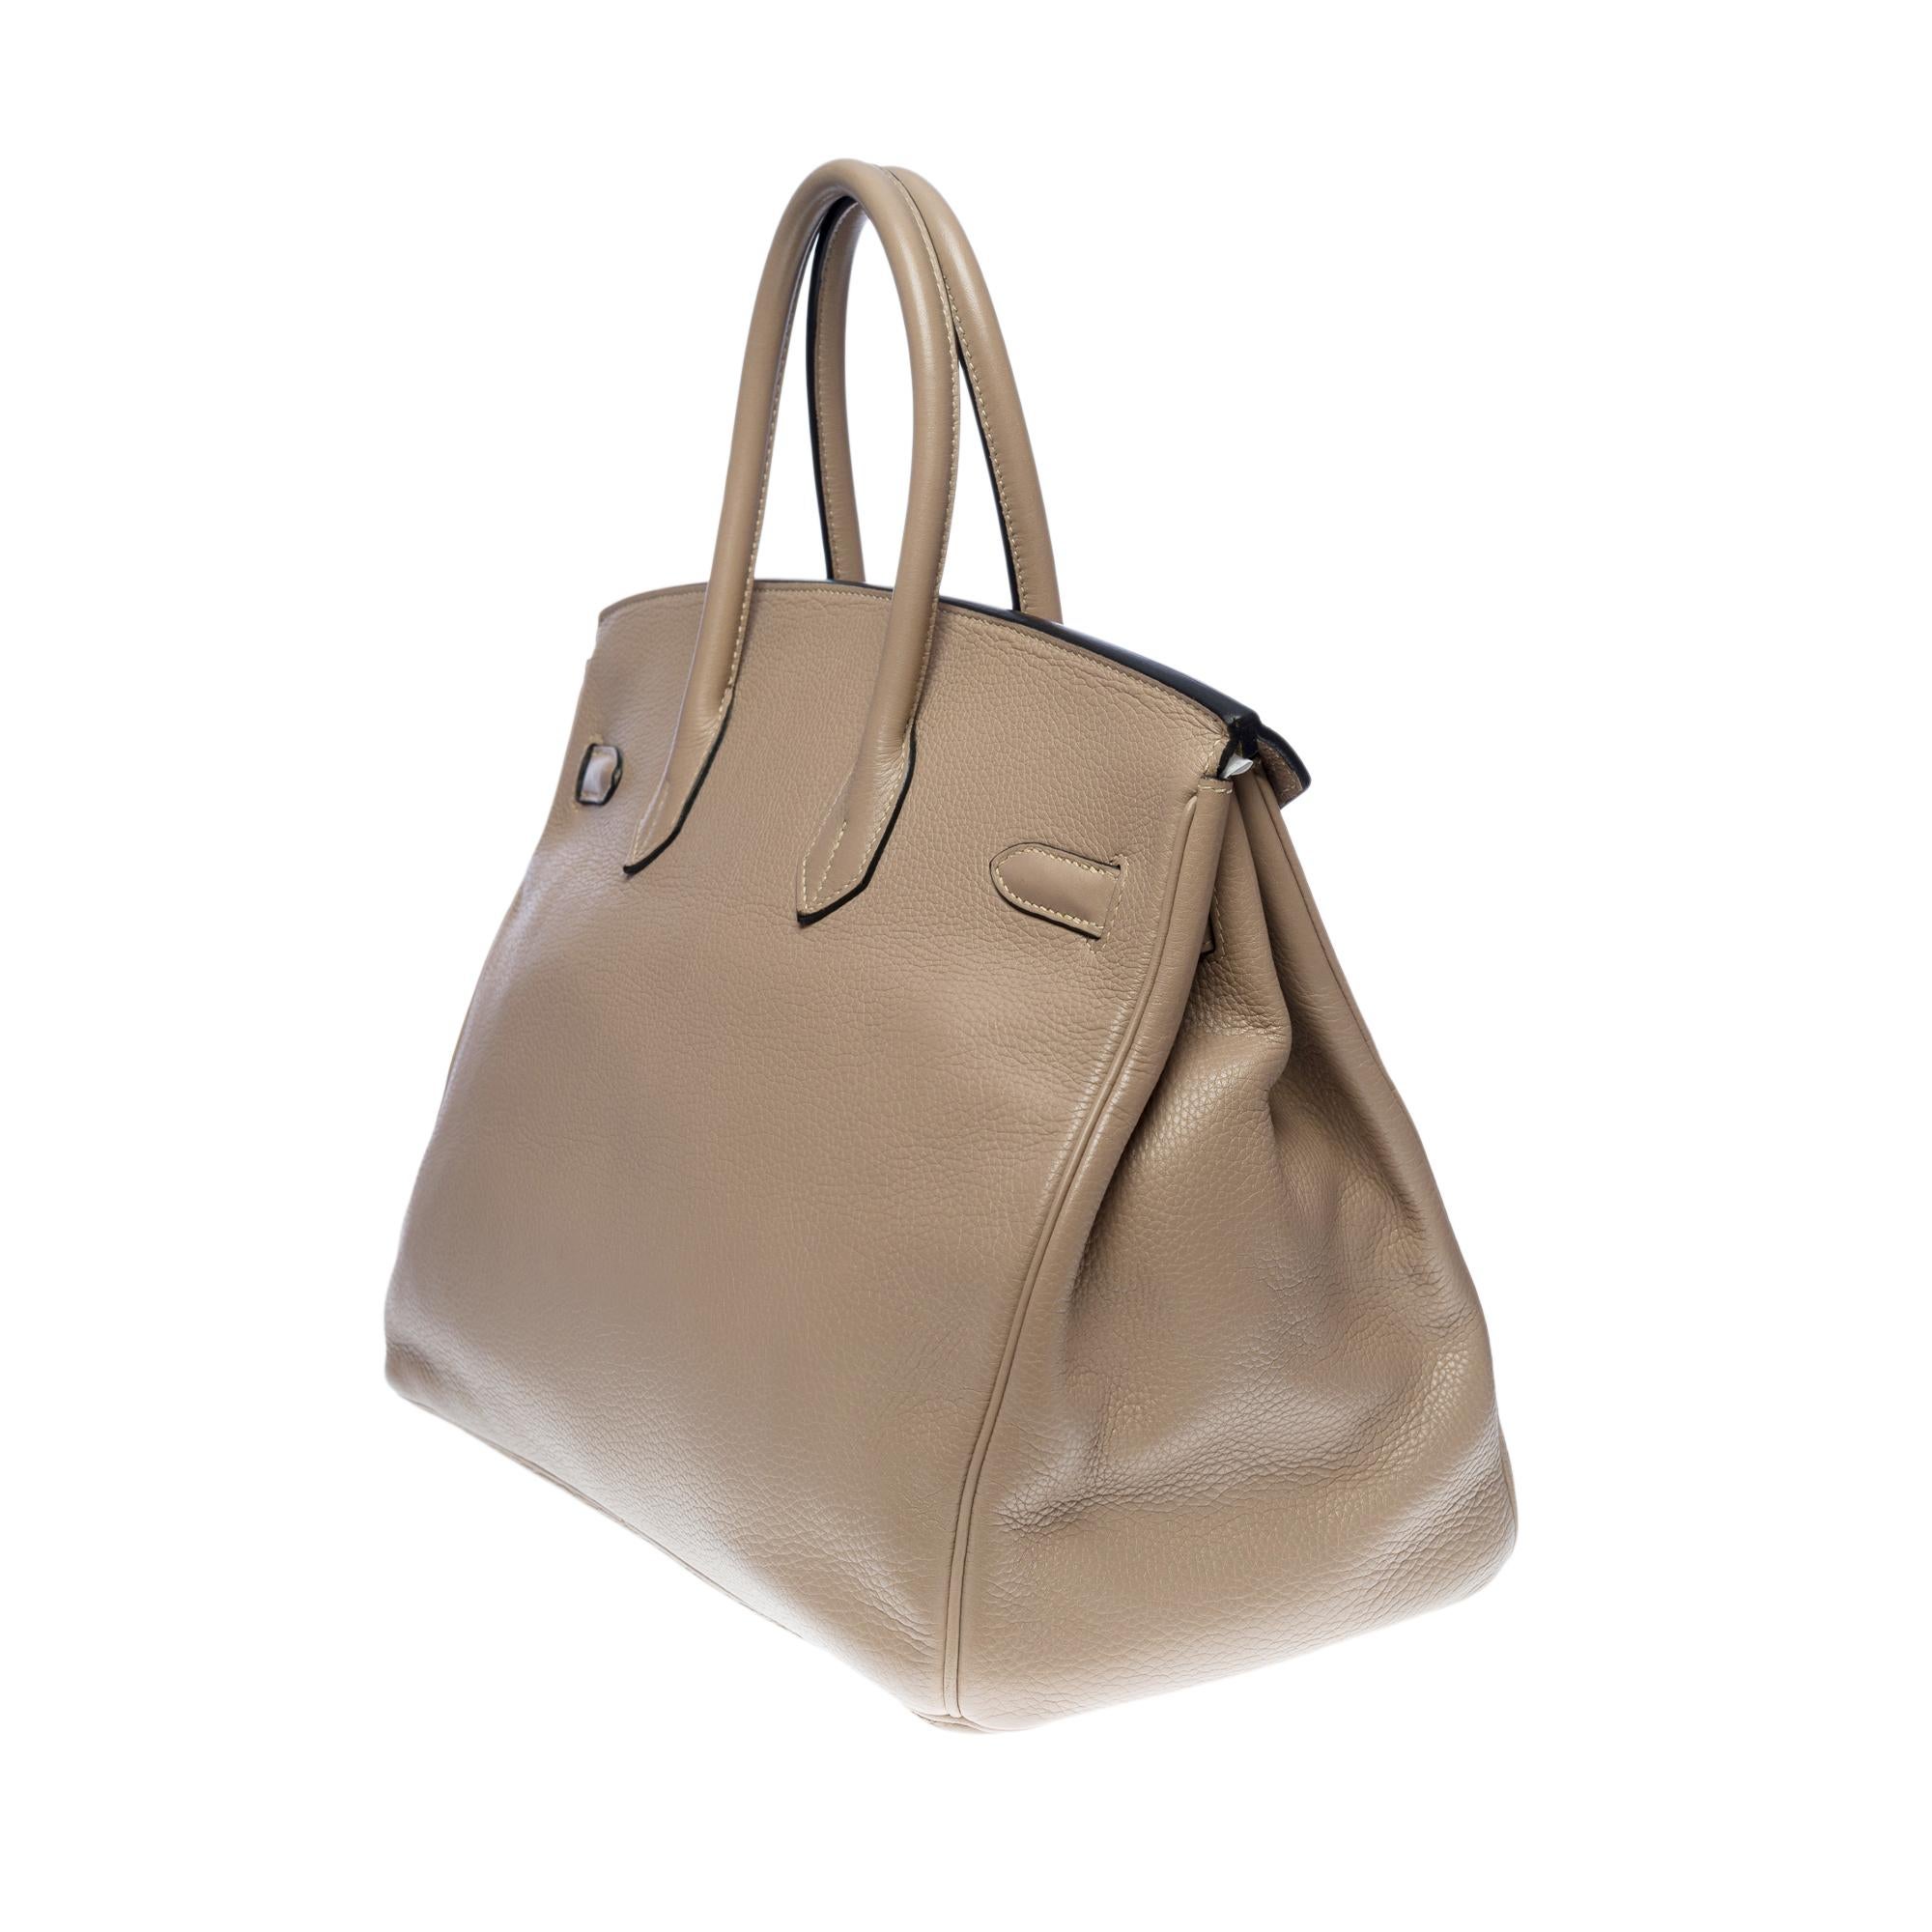 Superb Hermes Birkin 35 cm handbag in dove gray Togo leather, SHW In Good Condition In Paris, IDF